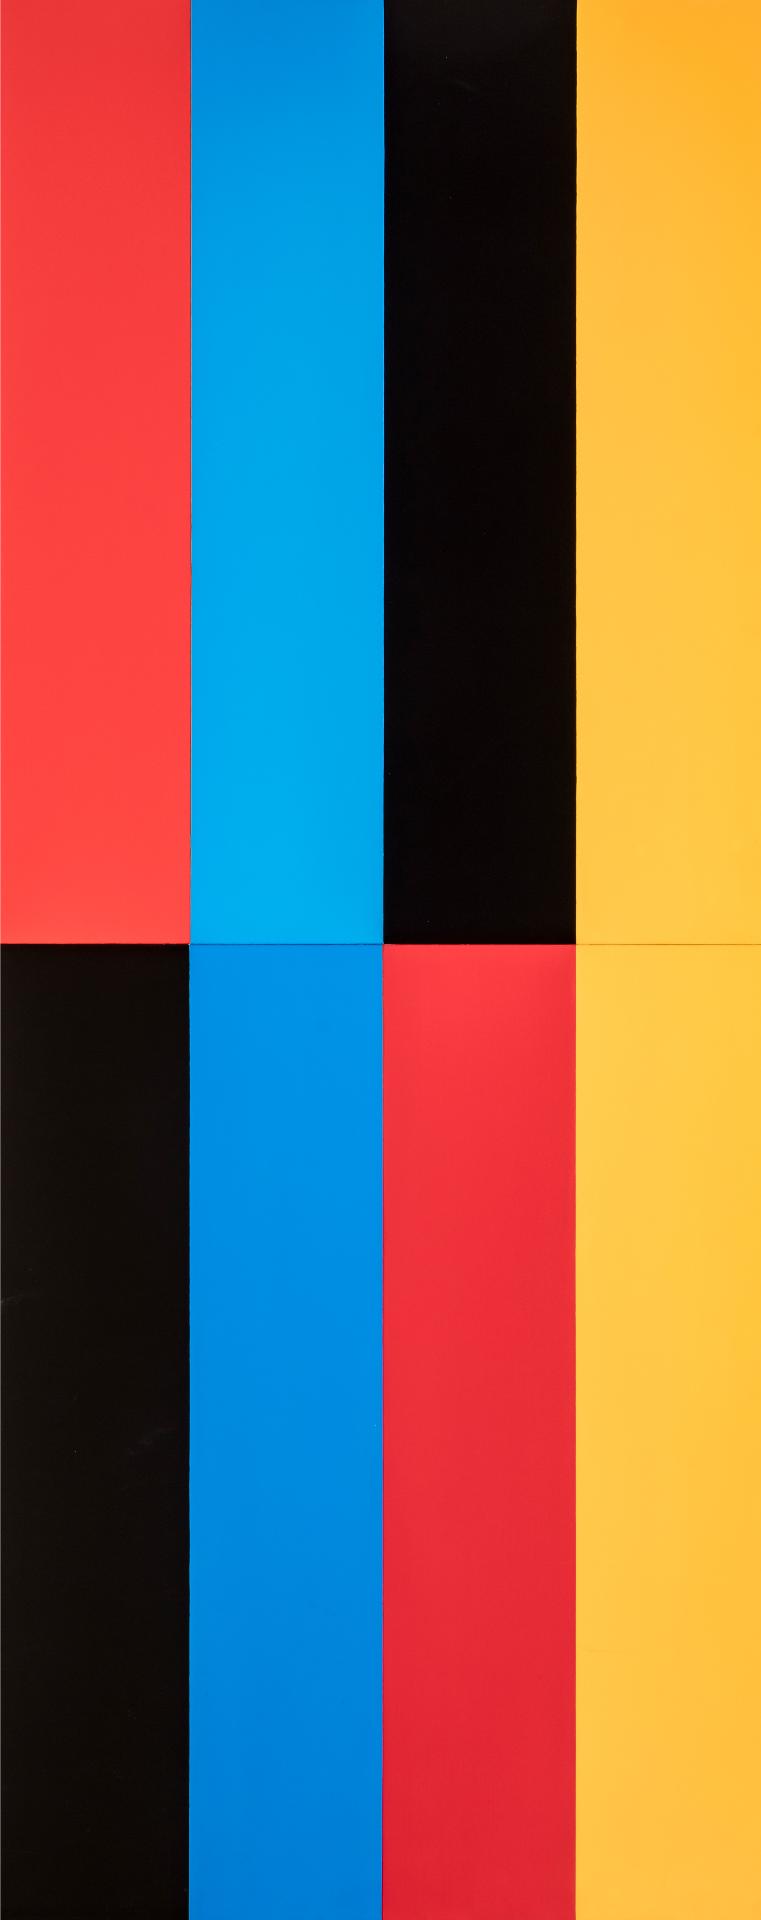 Jaan Poldaas (1948-2018) - Vertical Composition (Blue Yellow)